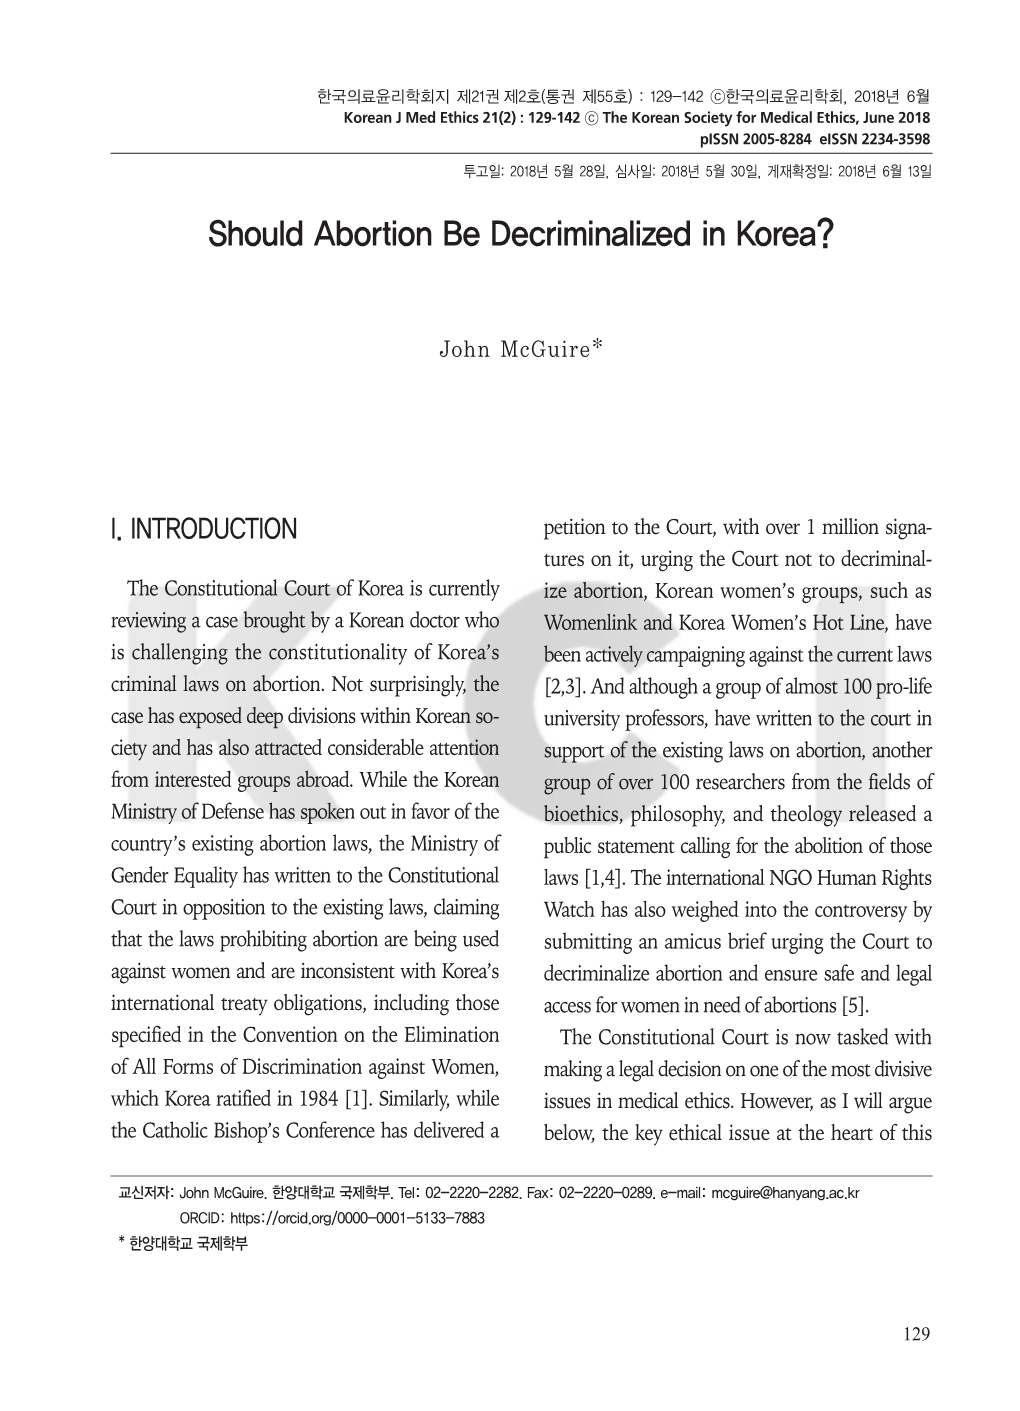 Should Abortion Be Decriminalized in Korea?